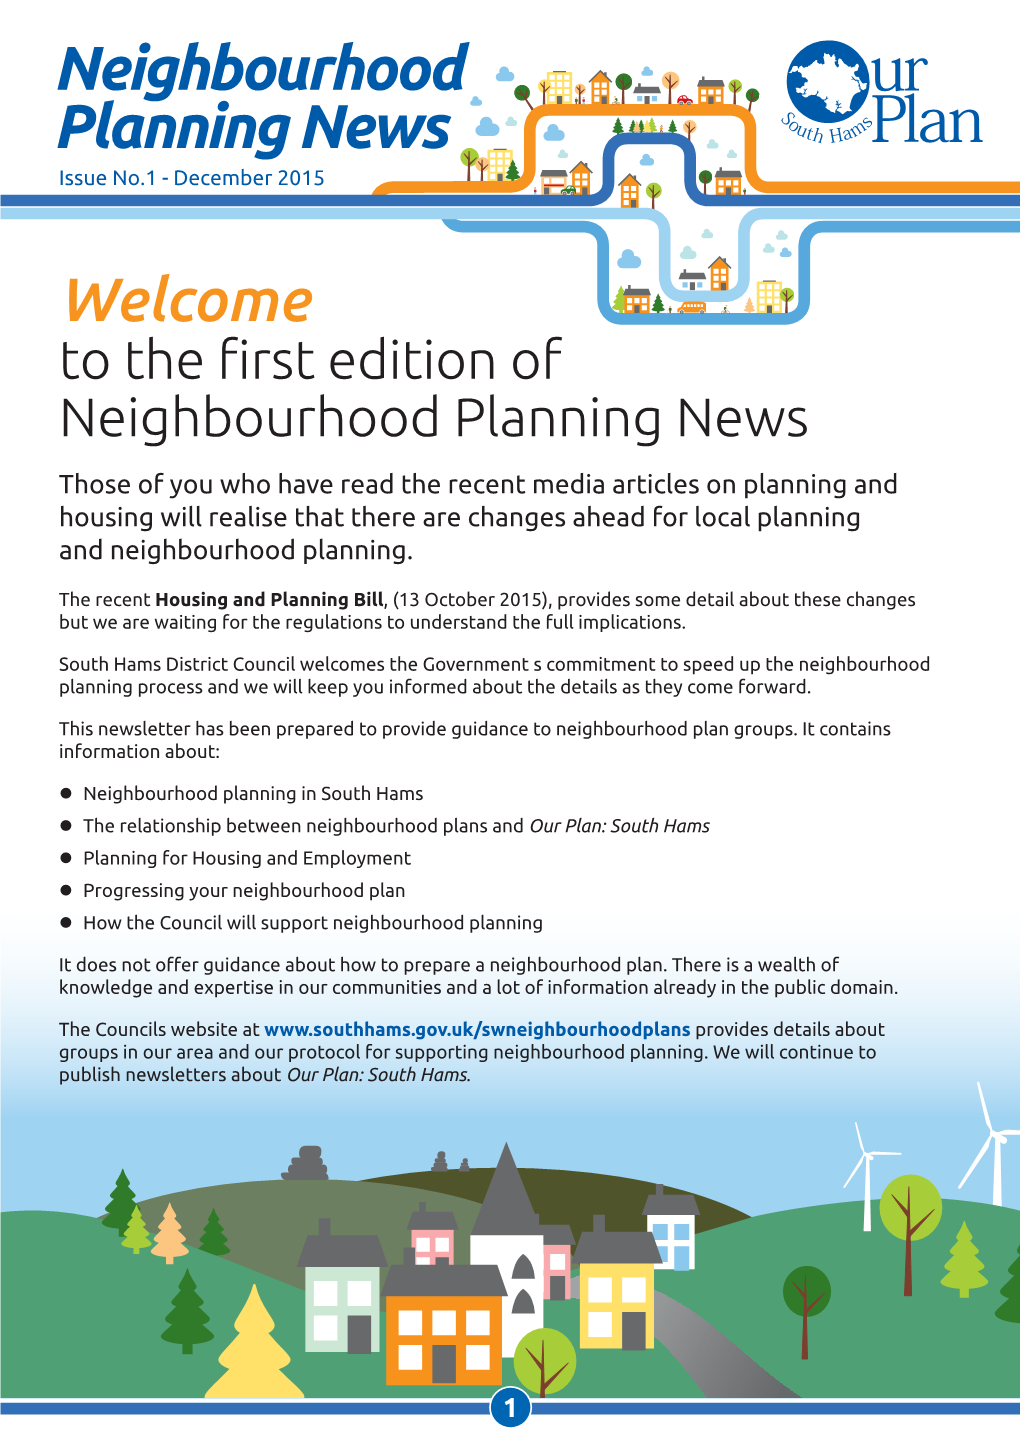 Neighbourhood Planning News Issue No.1 - December 2015